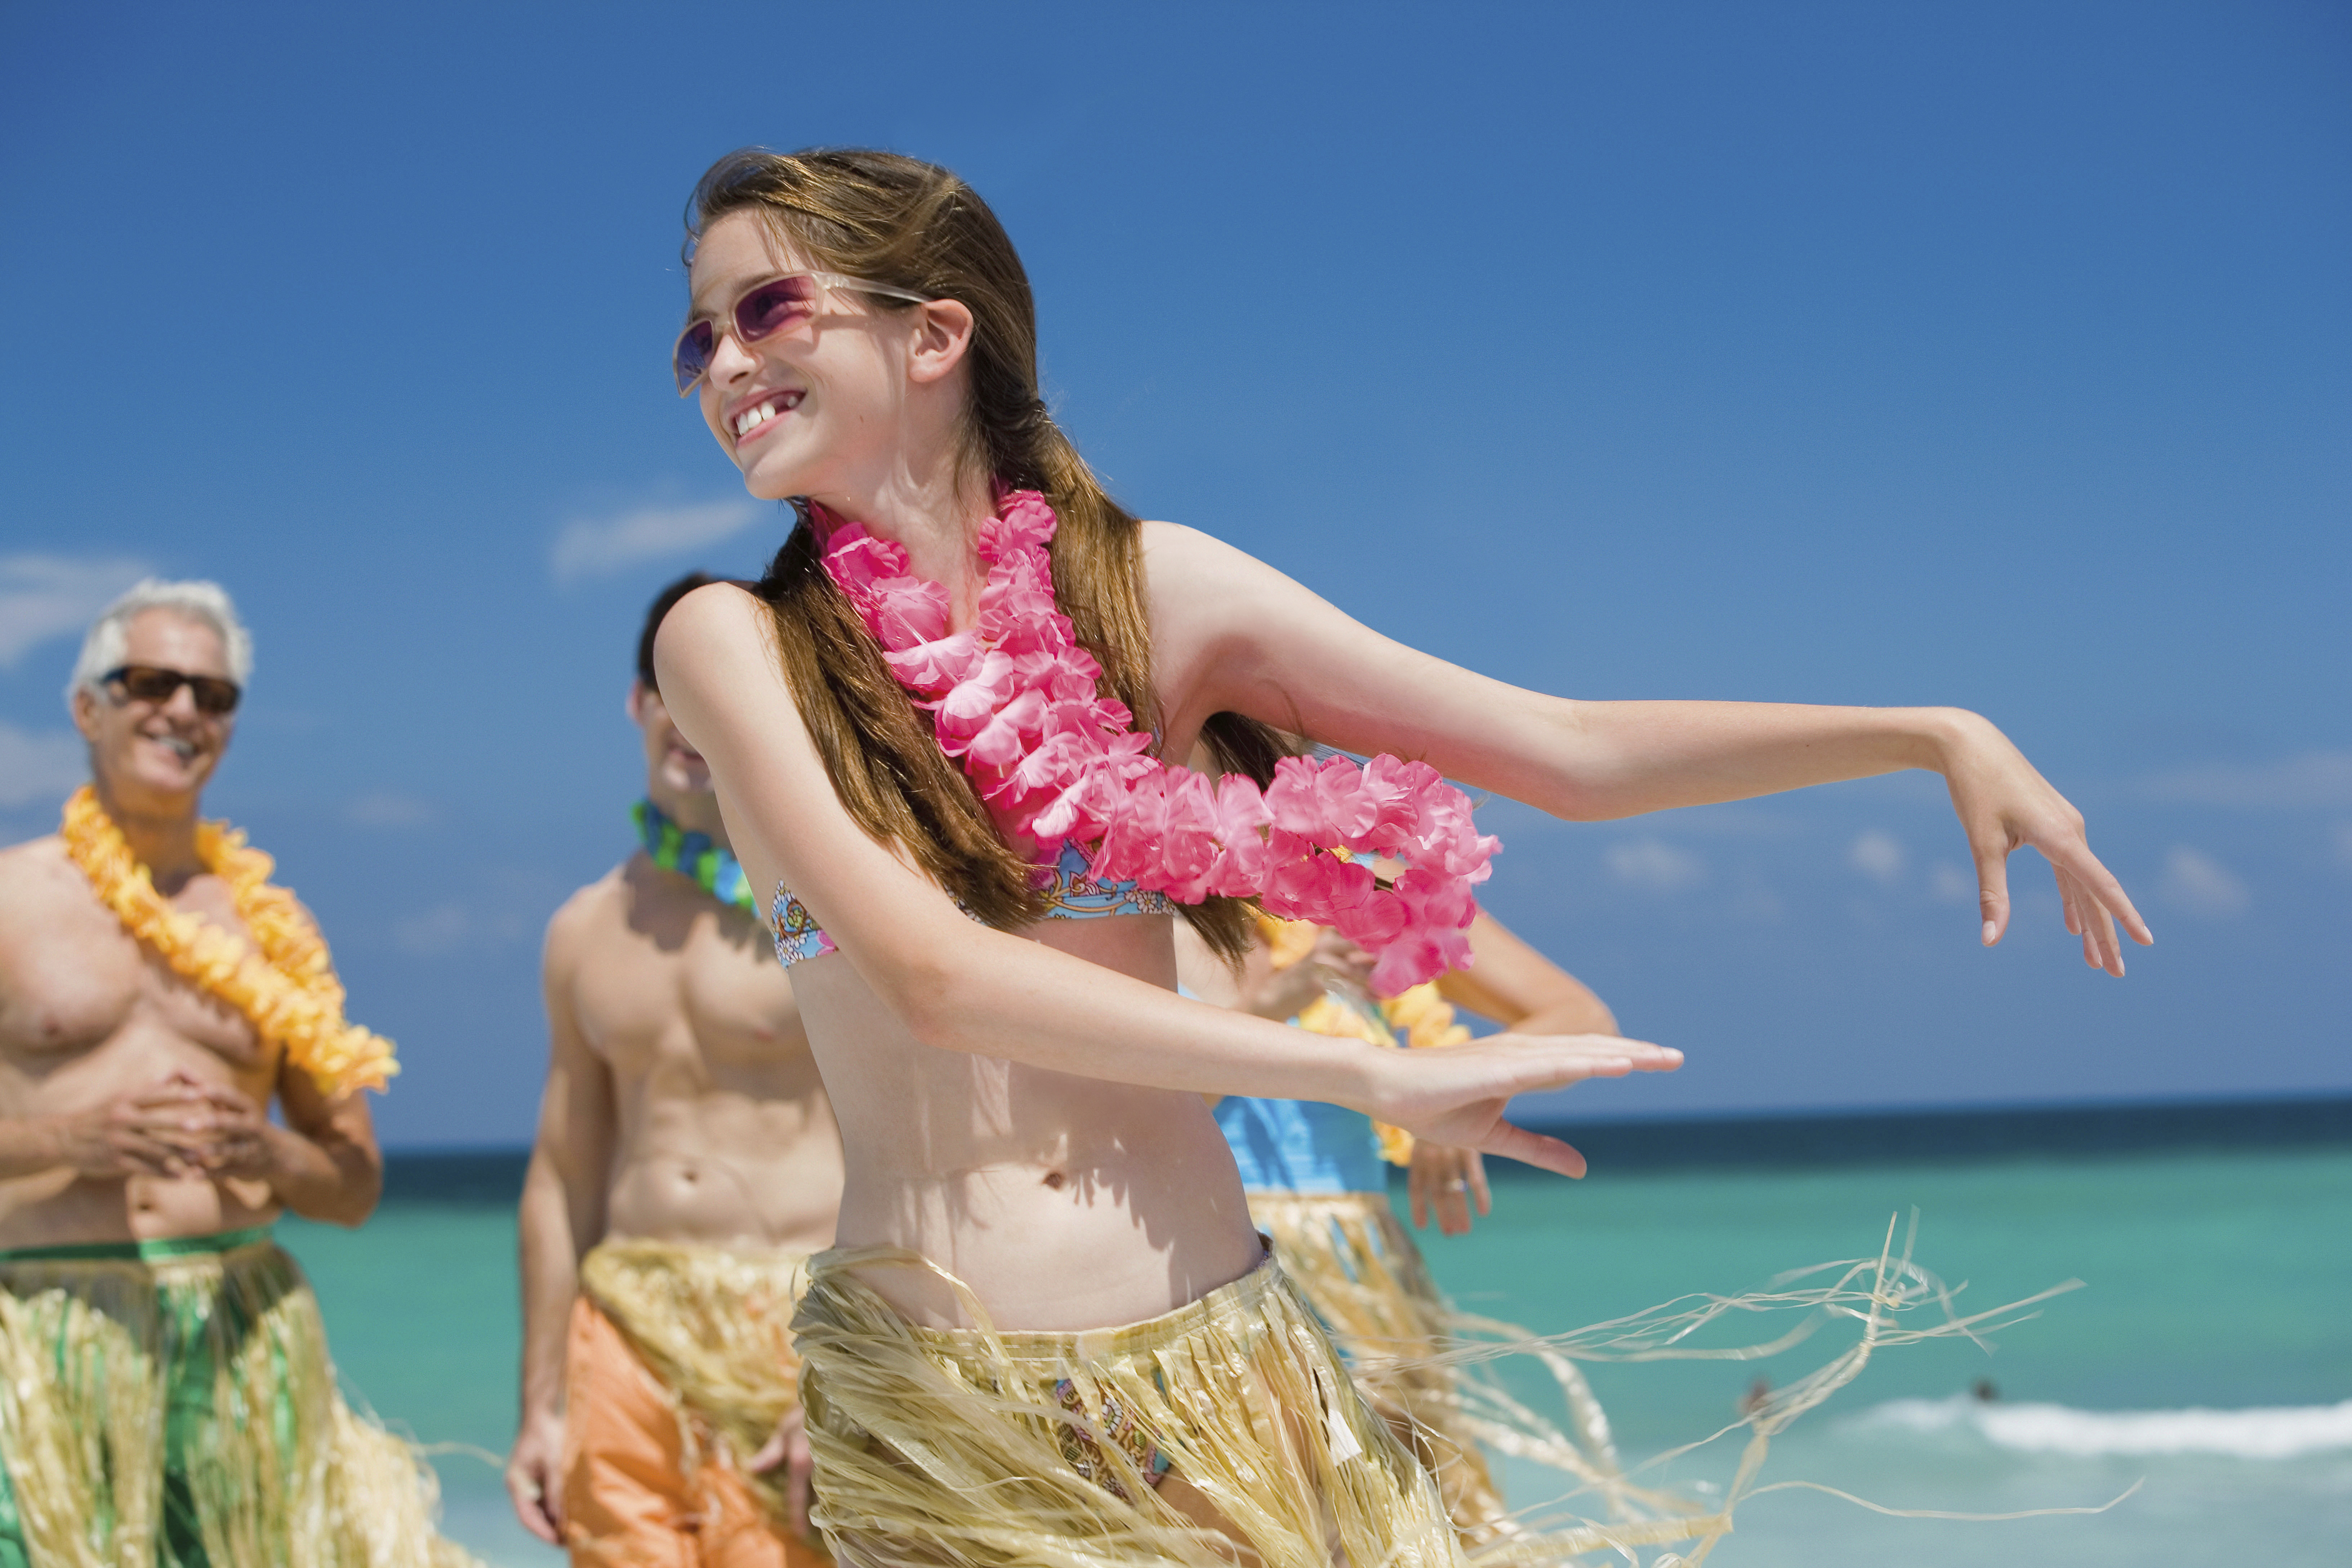 Girl hula dancing on a beach in Hawaii